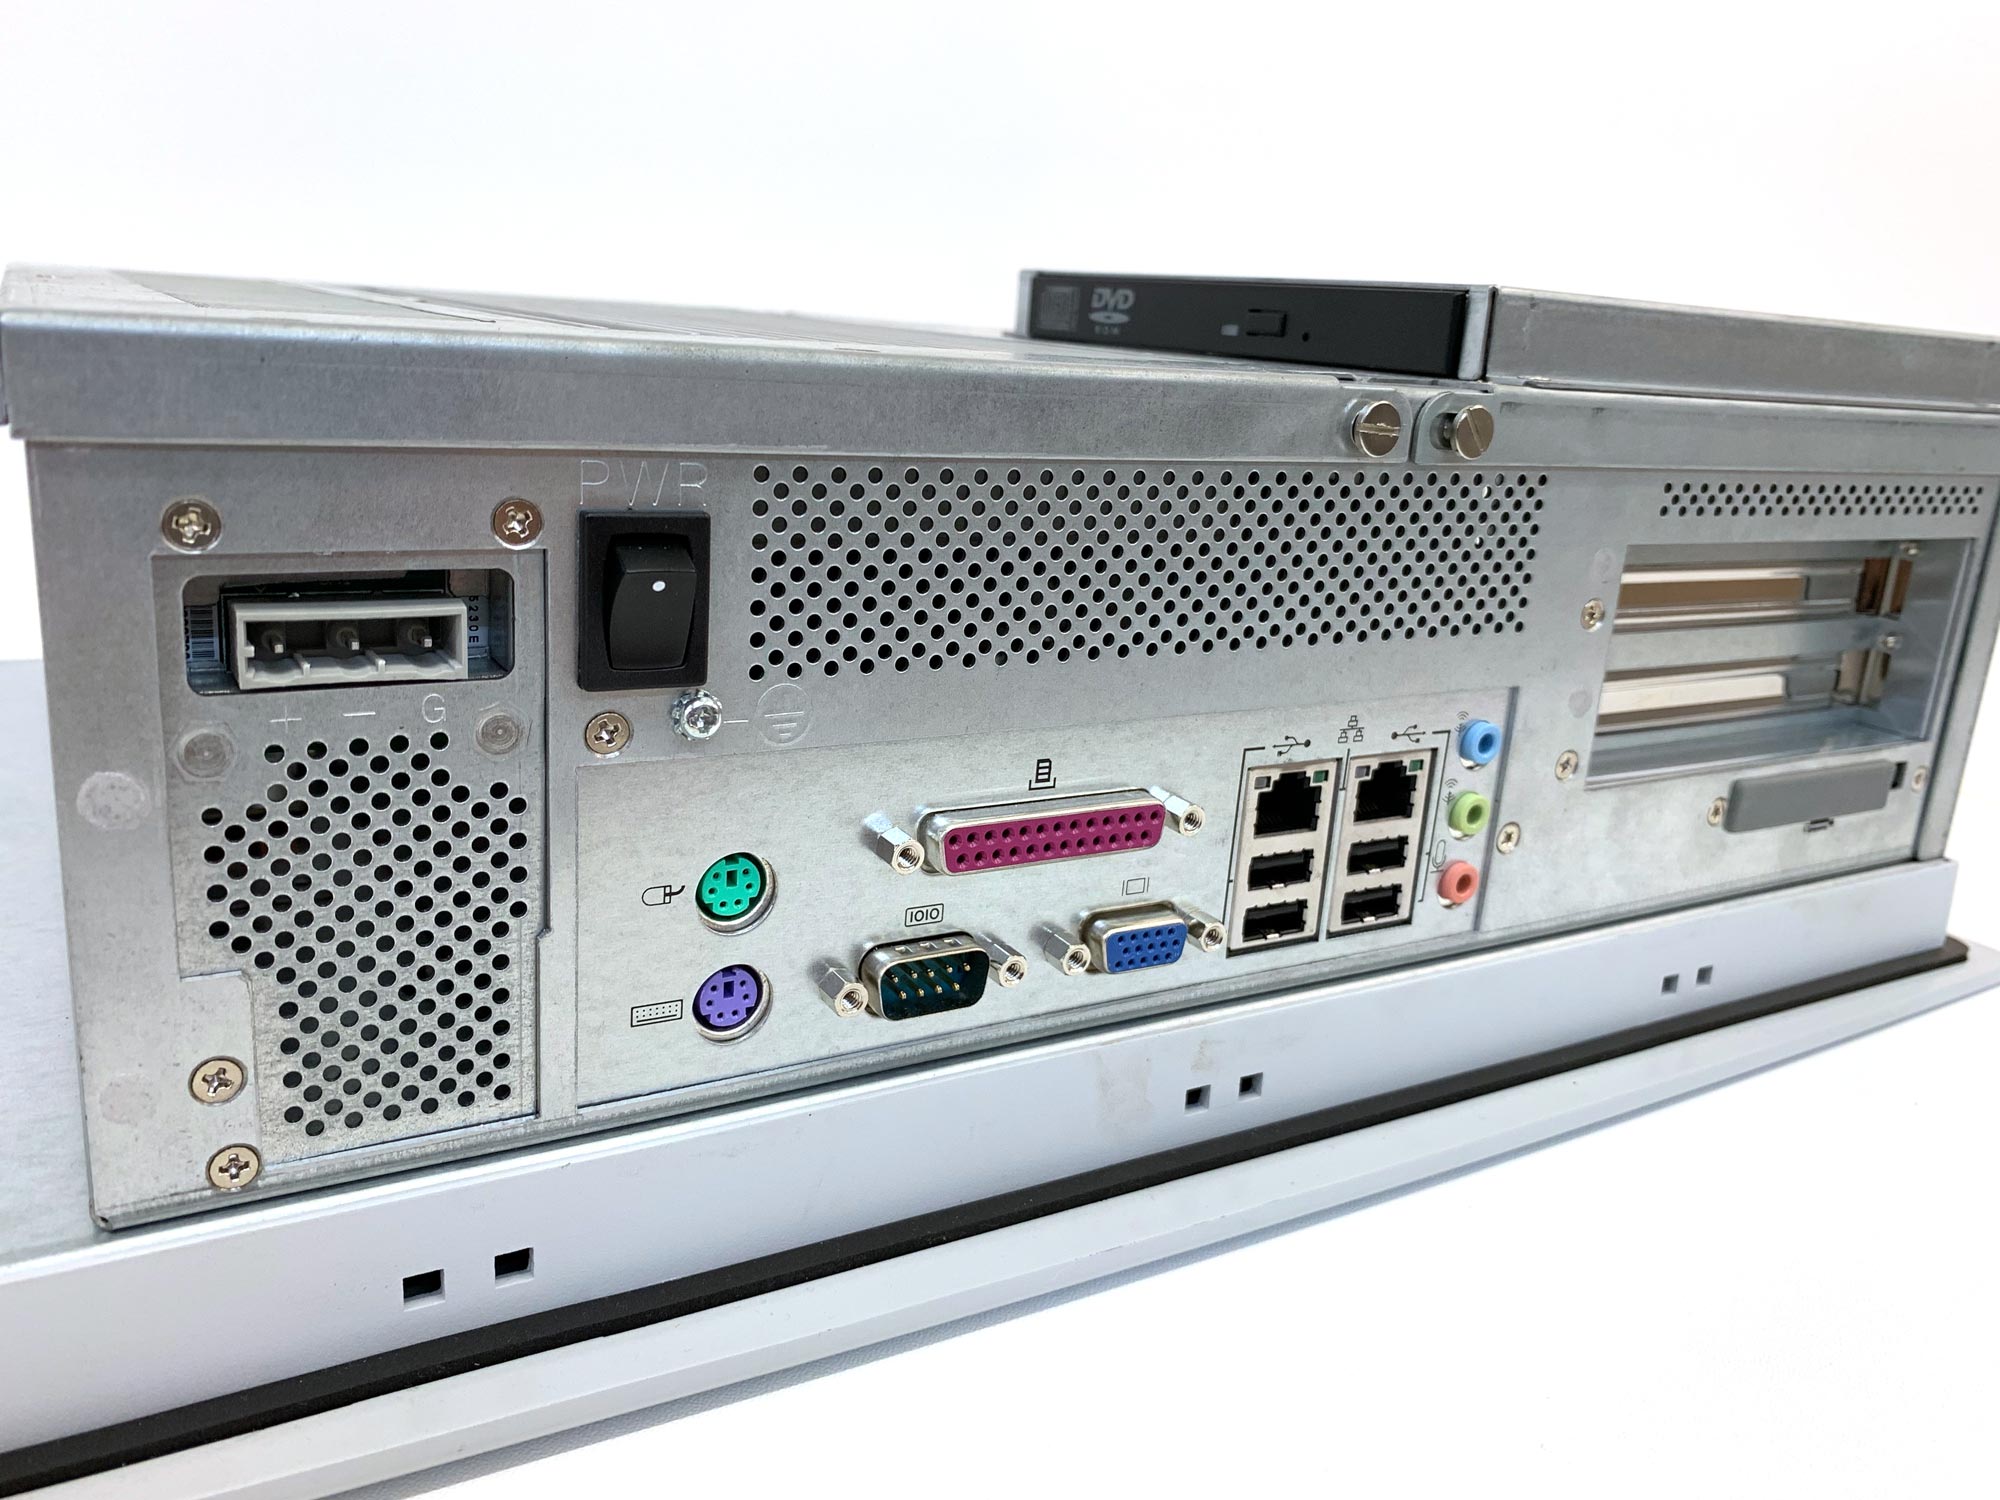 IPPC-6152F - Lüfterloser Industrie Panel PC mit 15-Zoll Display